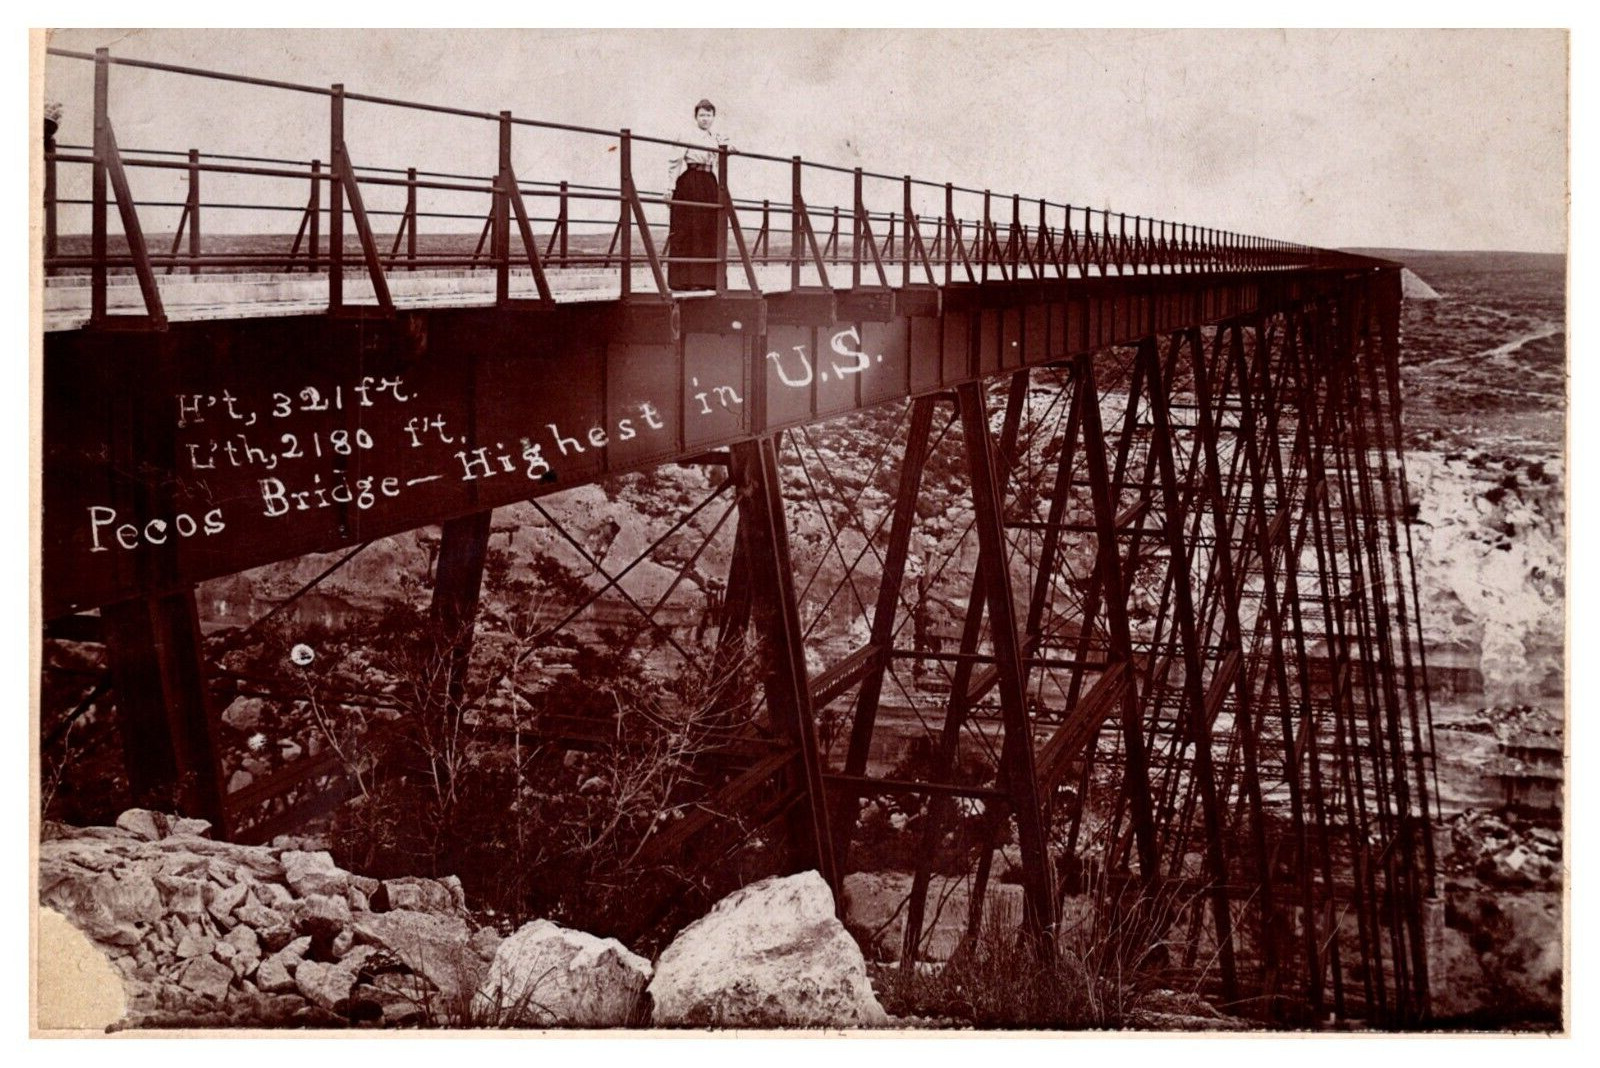 Union Pacific Railroad ~ PECOS RIVER HIGH BRIDGE cabinet card, Langtry  comstock